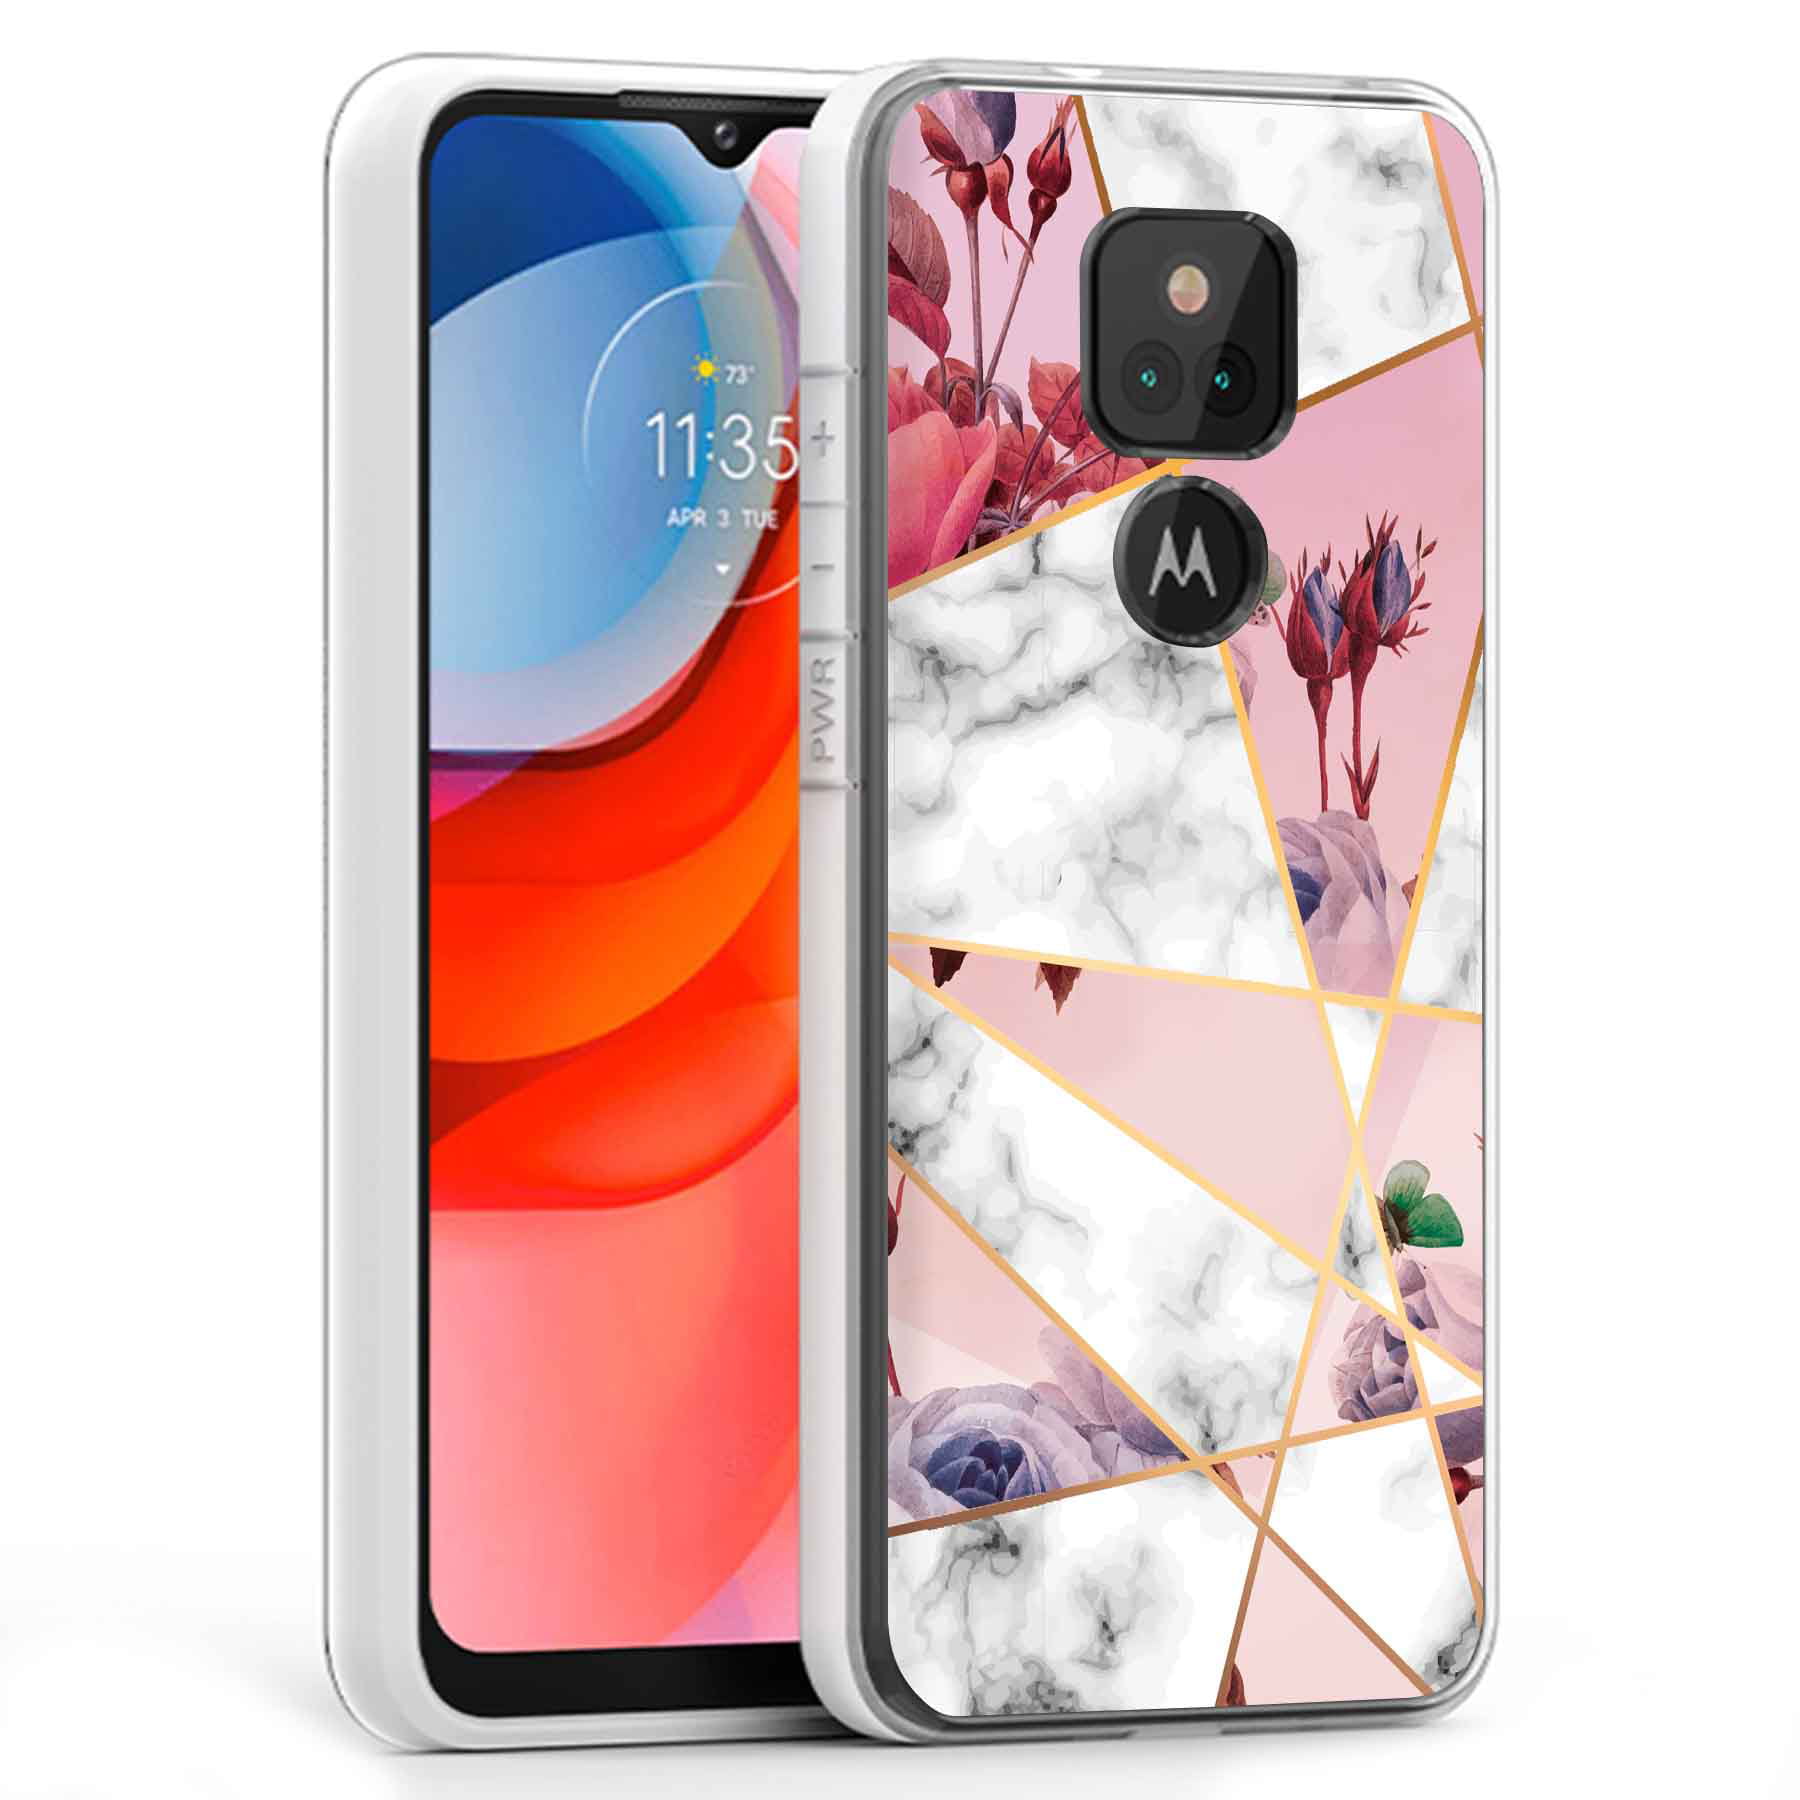 Clear Phone Case Cover Motorola Moto G Play 2021,Moto G Play,Watercolor Design Print,Light,Flexible,ProtectUSA